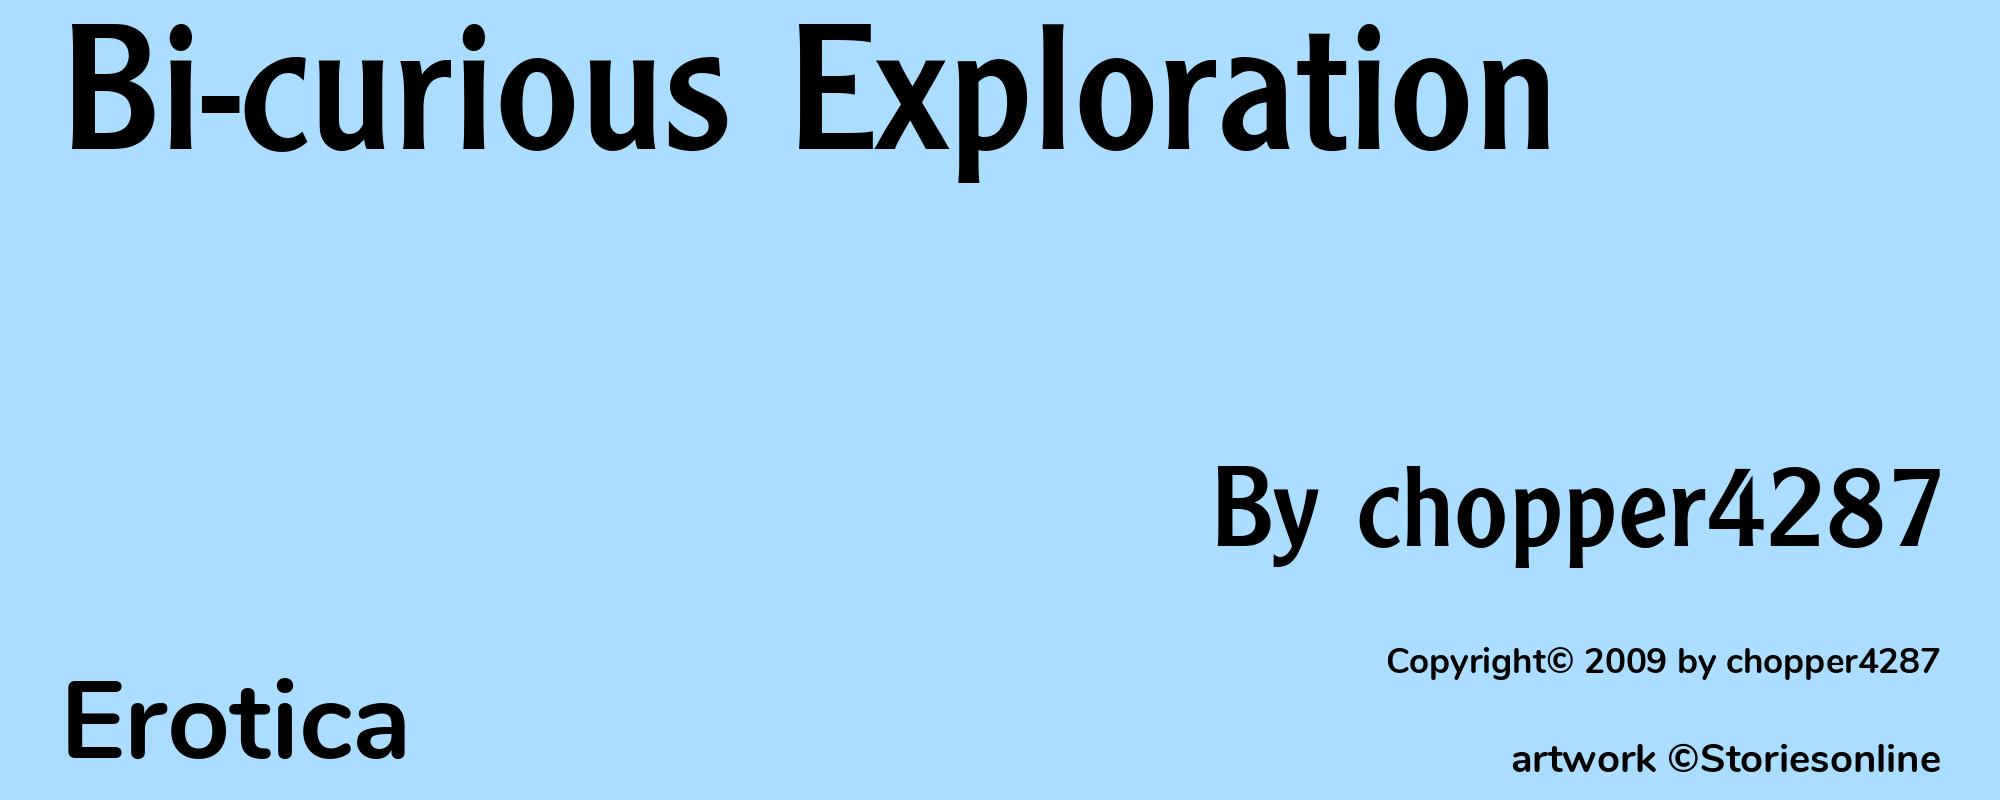 Bi-curious Exploration - Cover